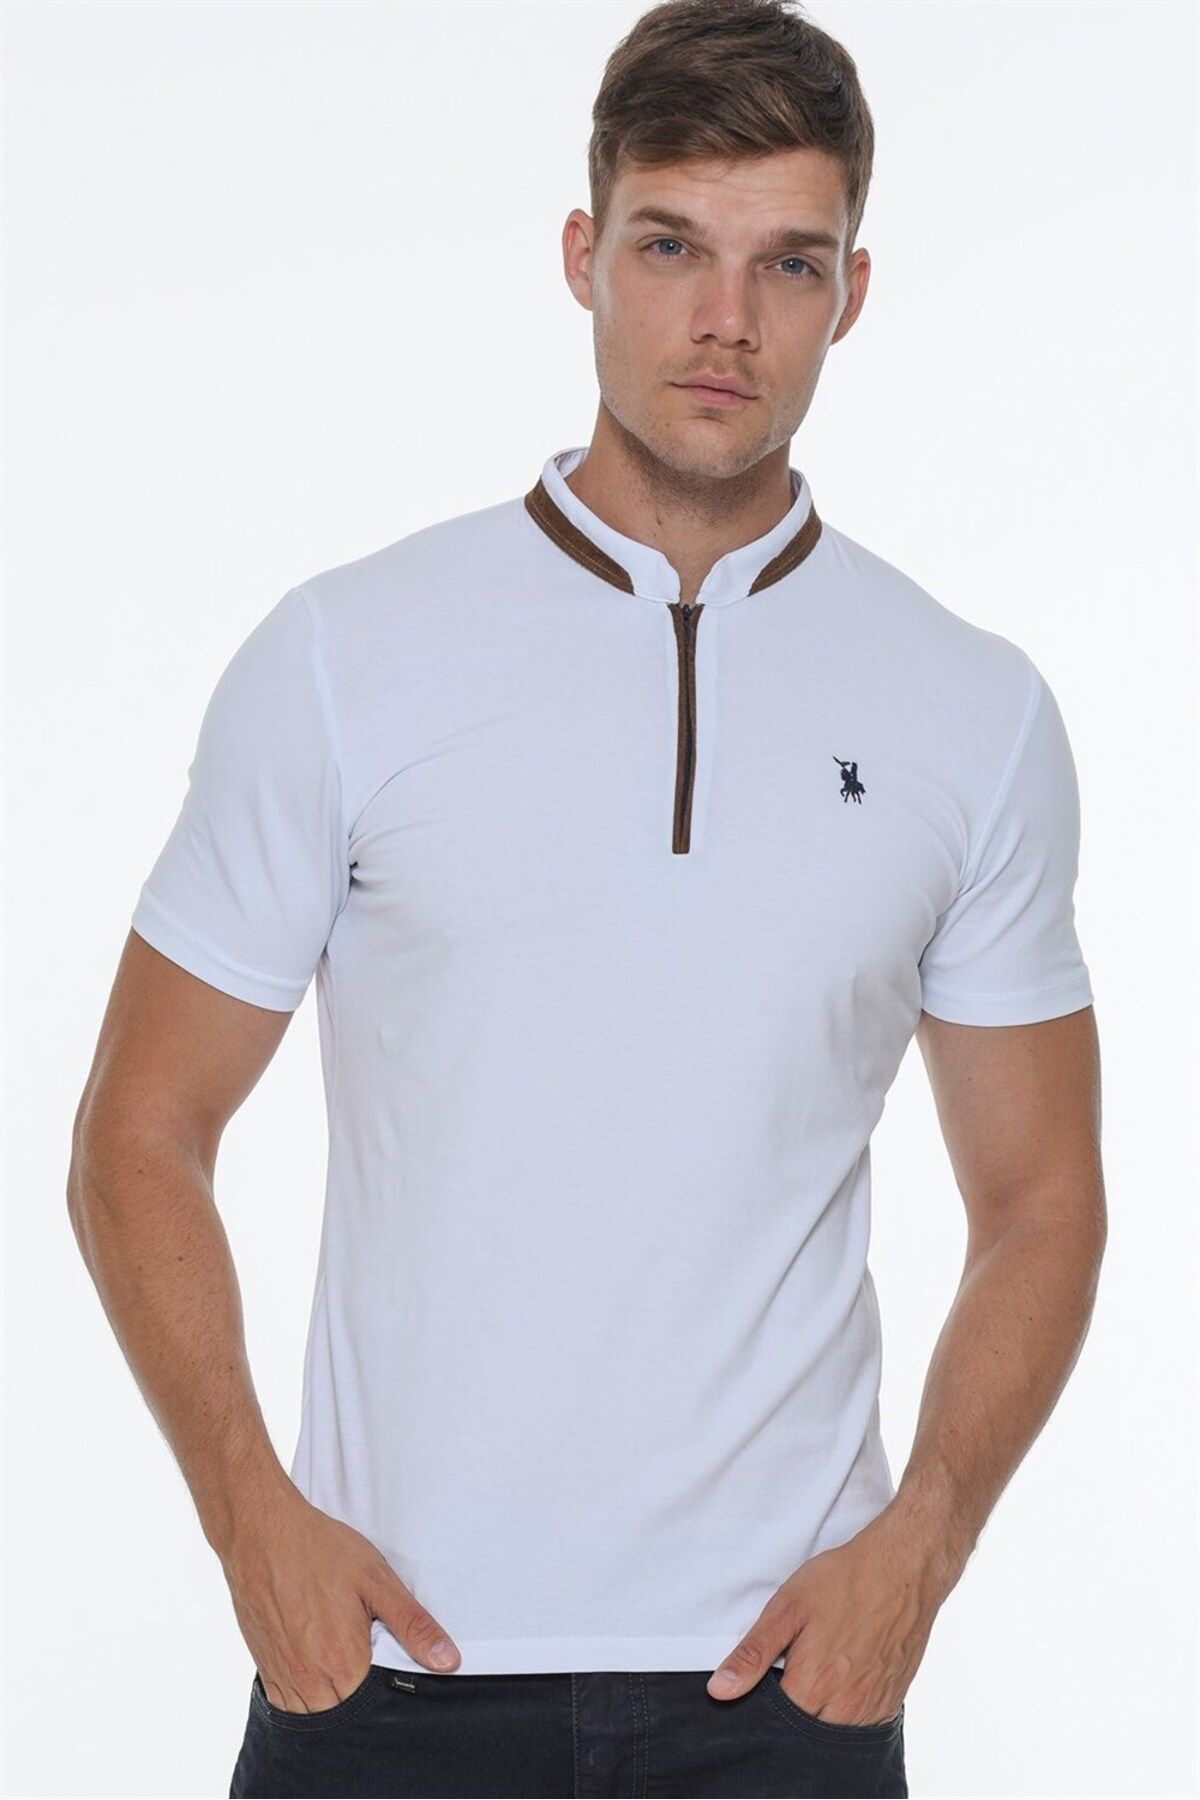 Dewberry ست پنج تی شرت مردانه زیپ دار T8571-سفید-مشکی-سرمه ای-سورمه ای-خاکی